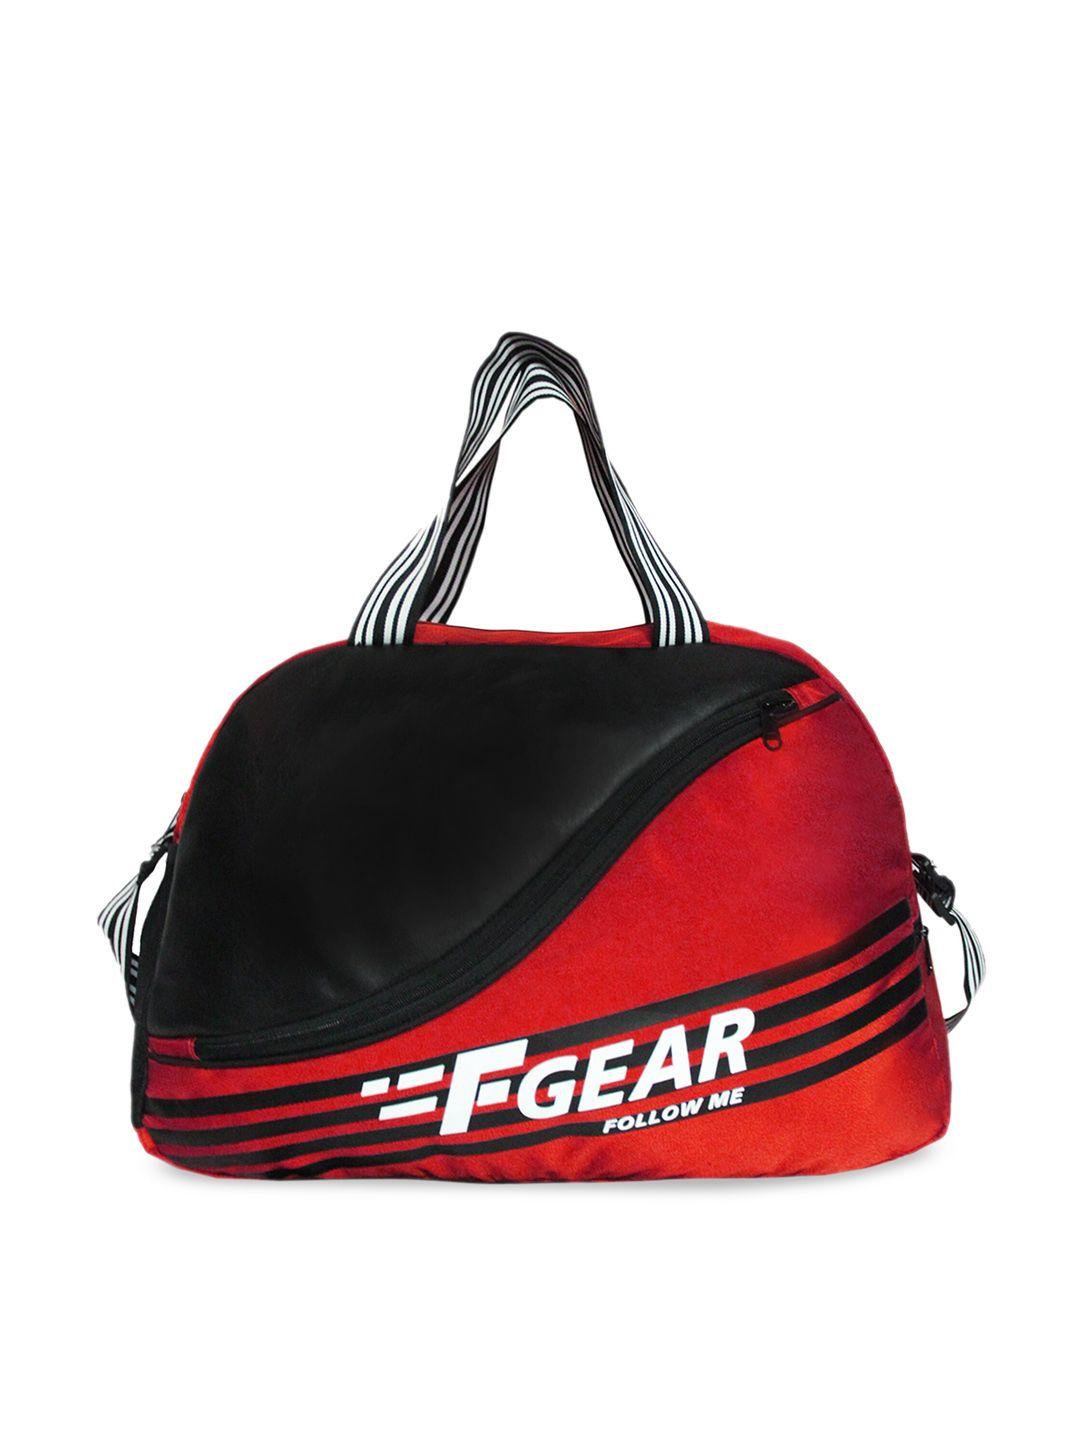 f gear unisex red & black printed duffel bag